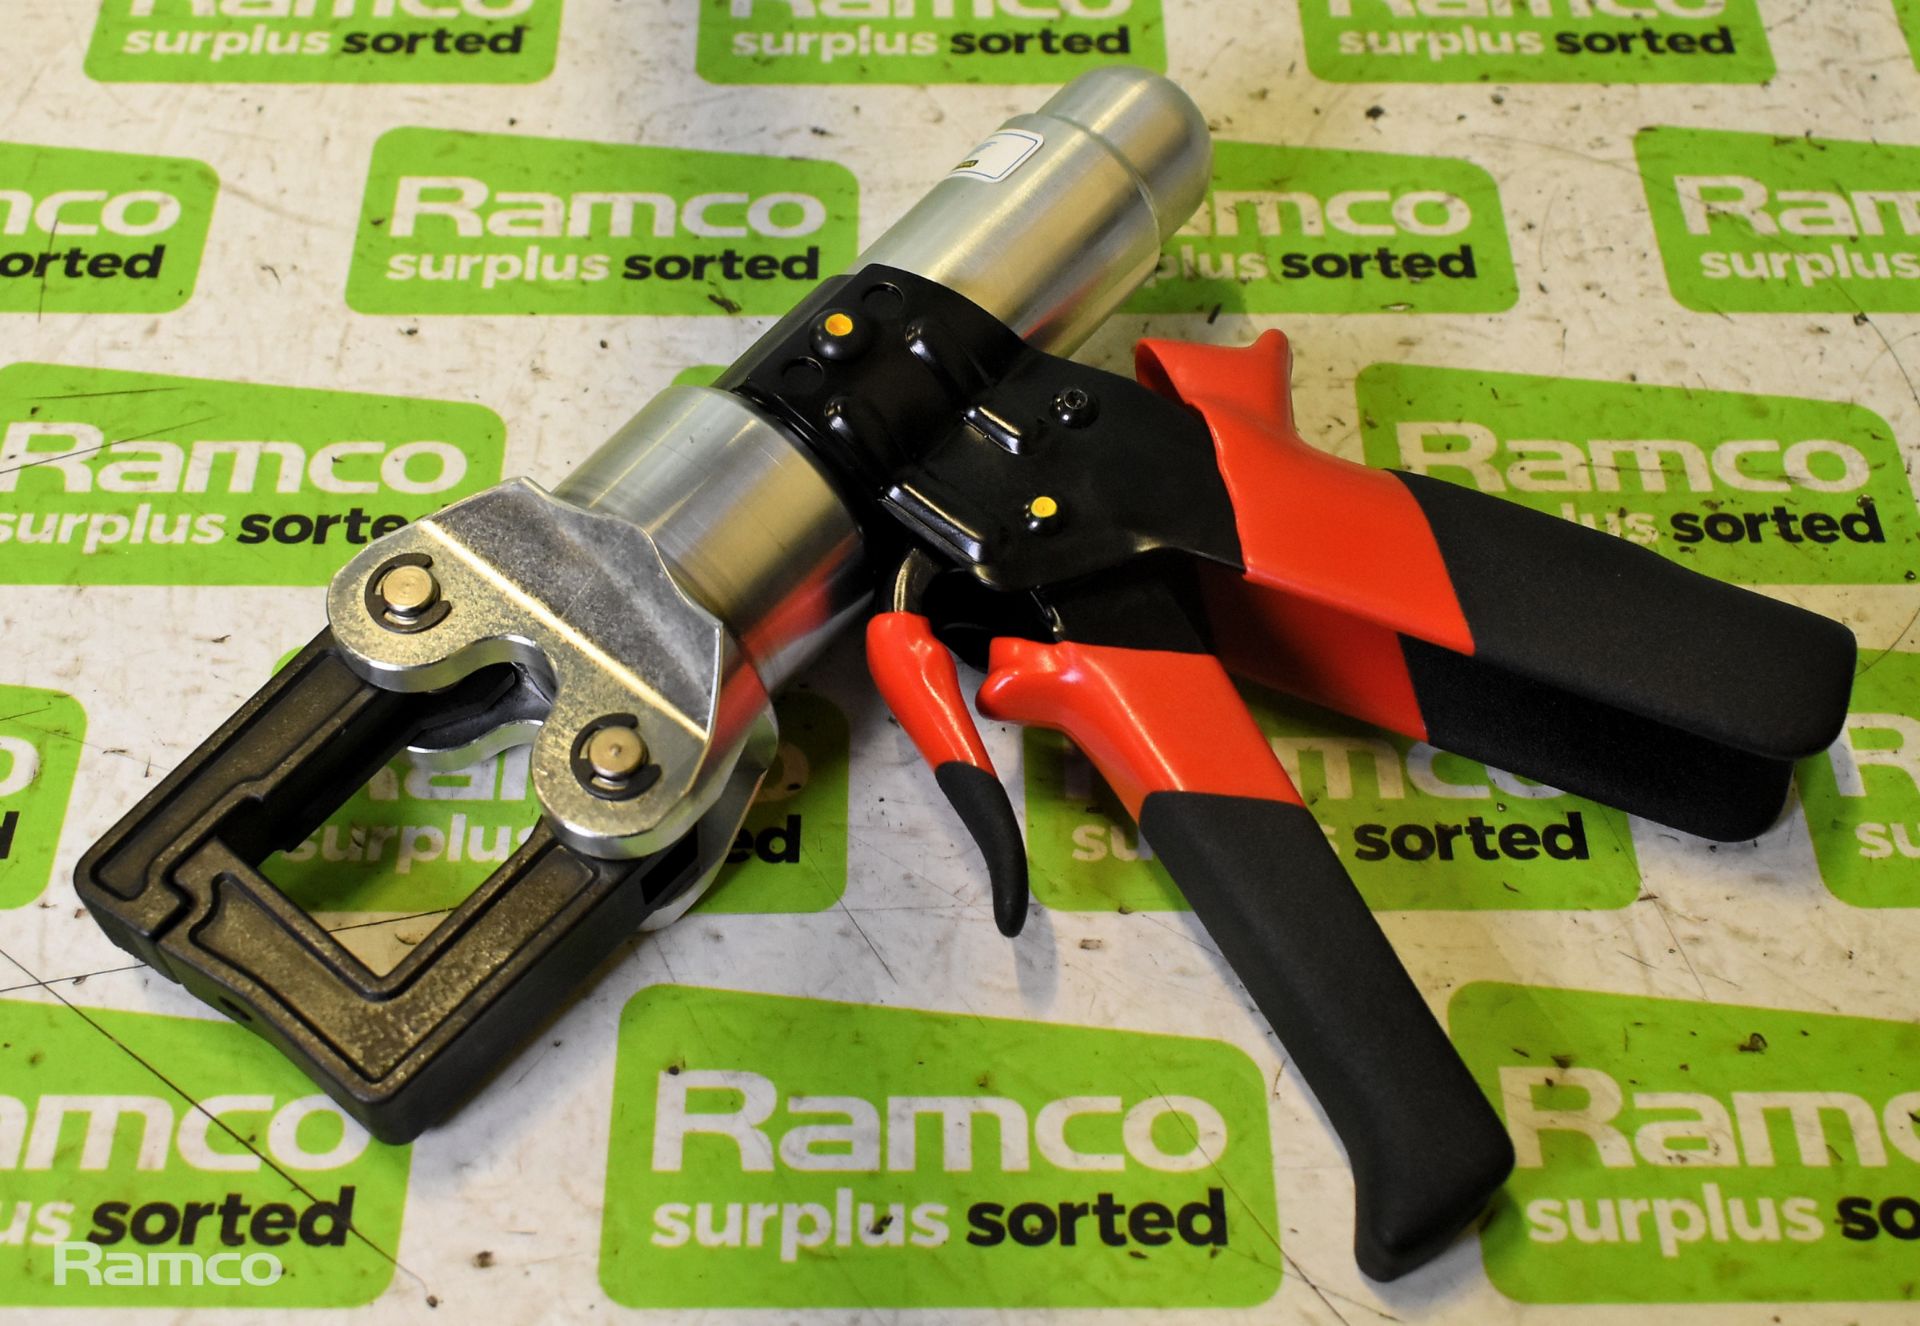 Glenair MRP0237 hand hydraulic crimping tool kit - Image 5 of 10